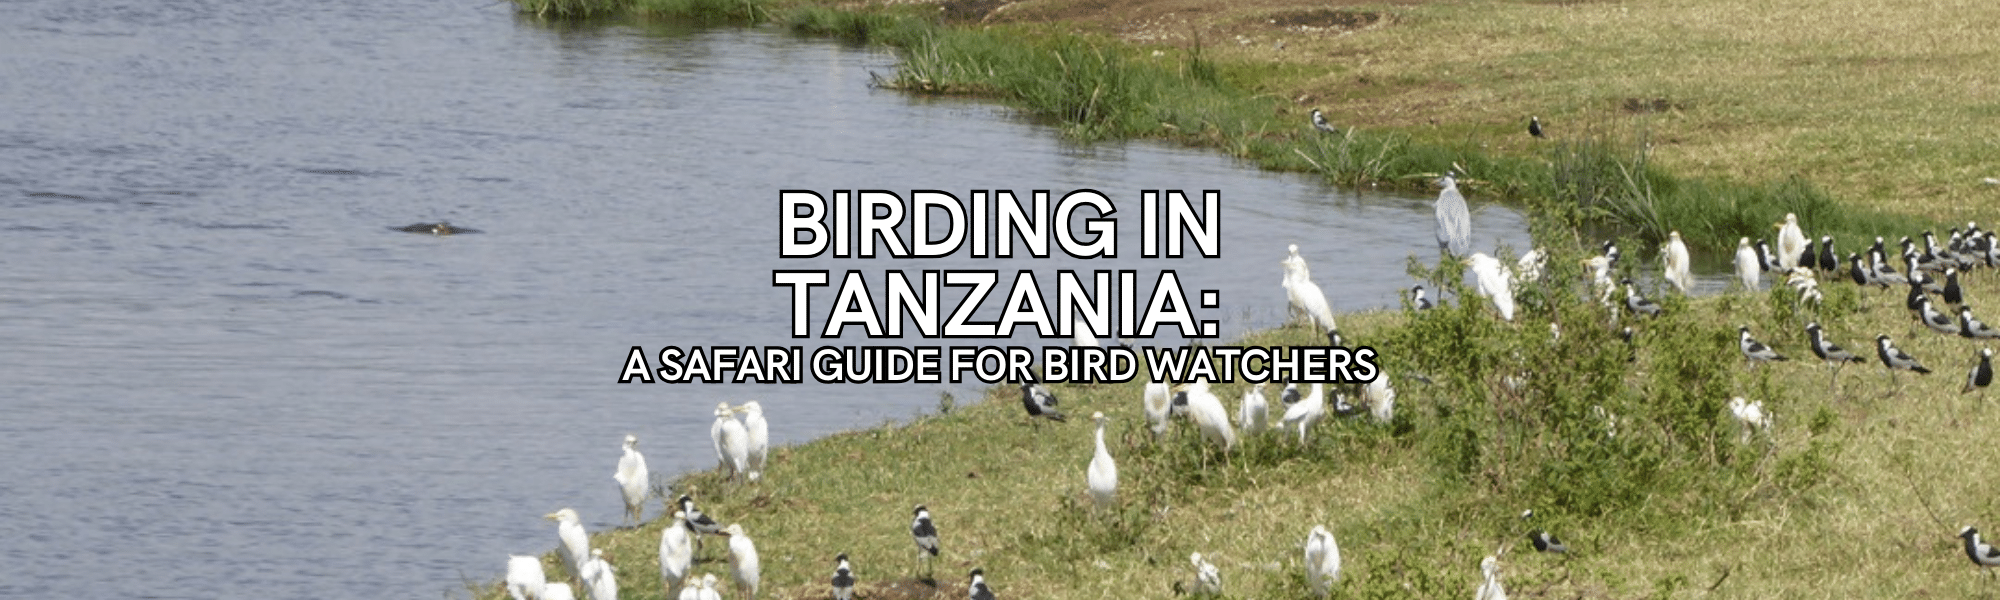 Birding in Tanzania